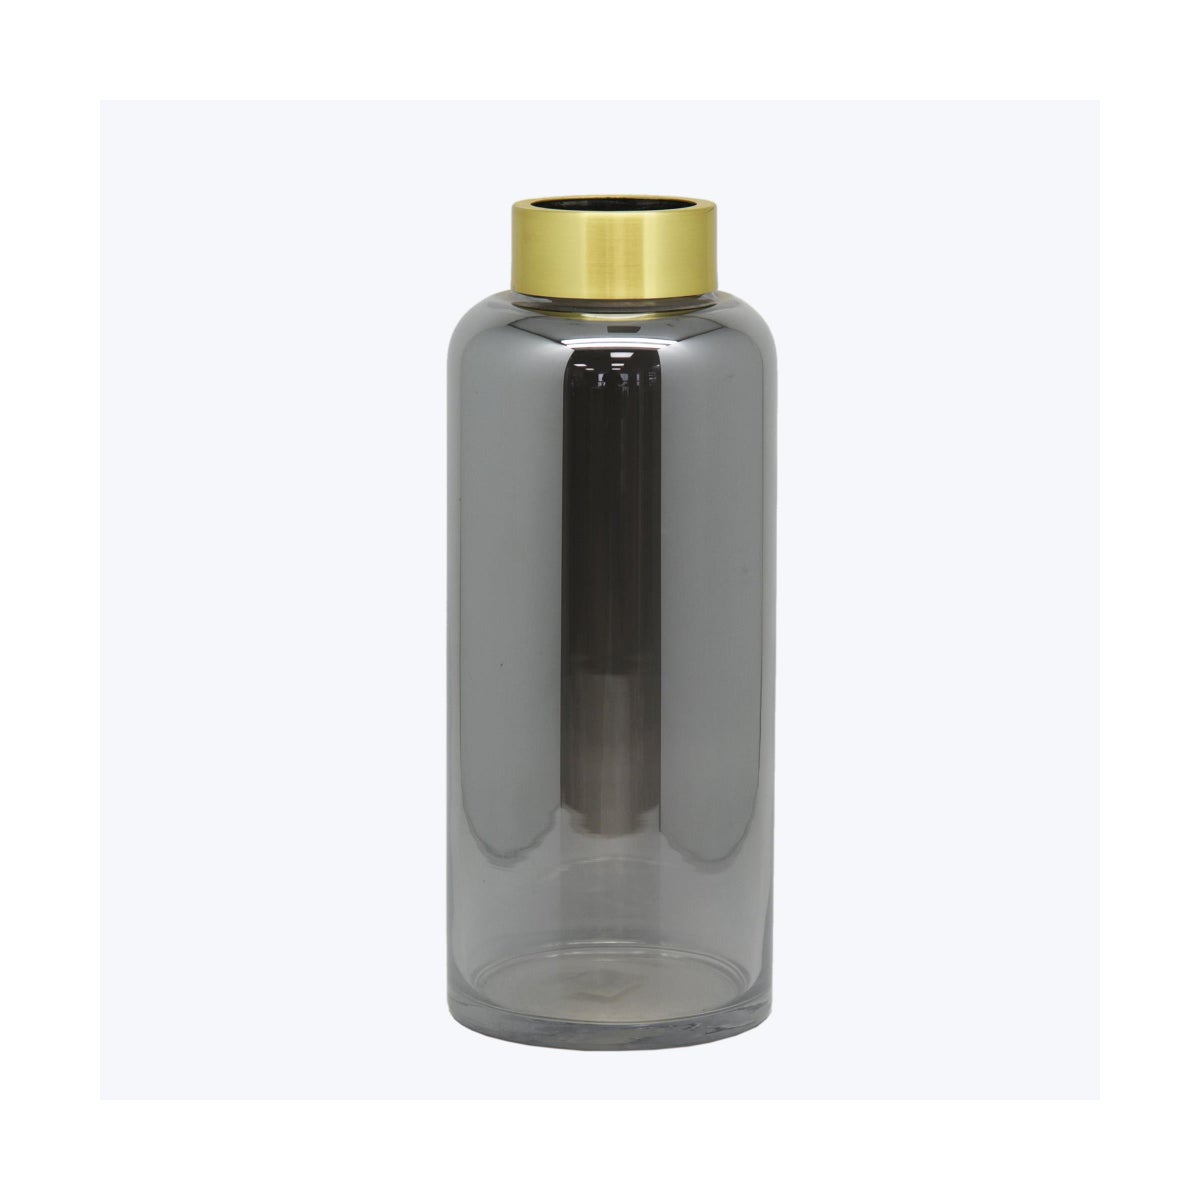 Handblown Mercury Glass/Metal Tabletop Vase Smoke Gray & Gold Metal